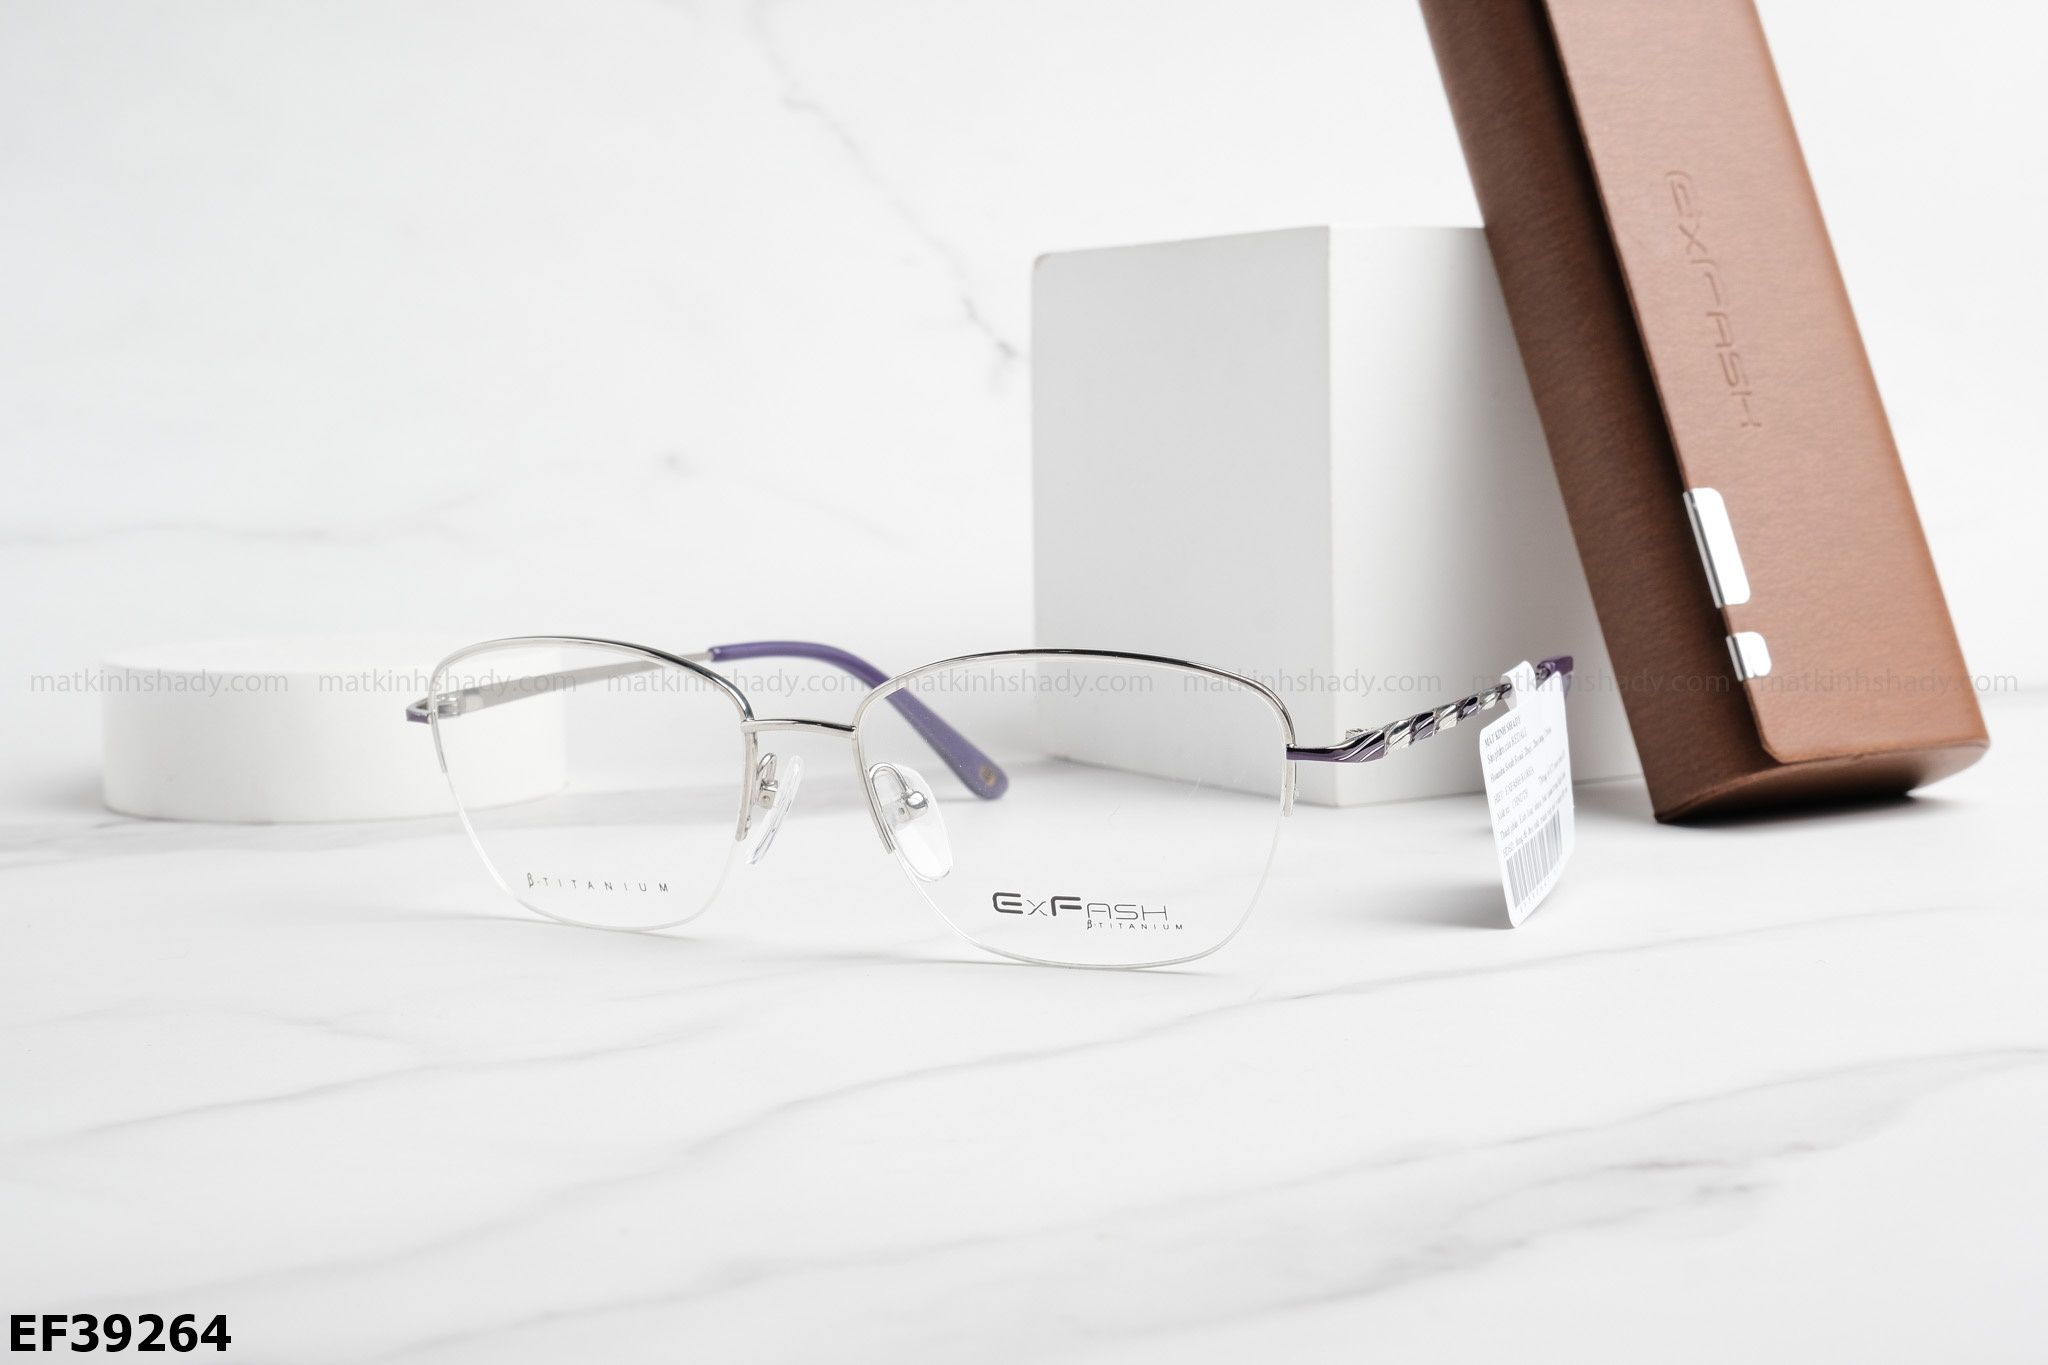  Exfash Eyewear - Glasses - EF39264 